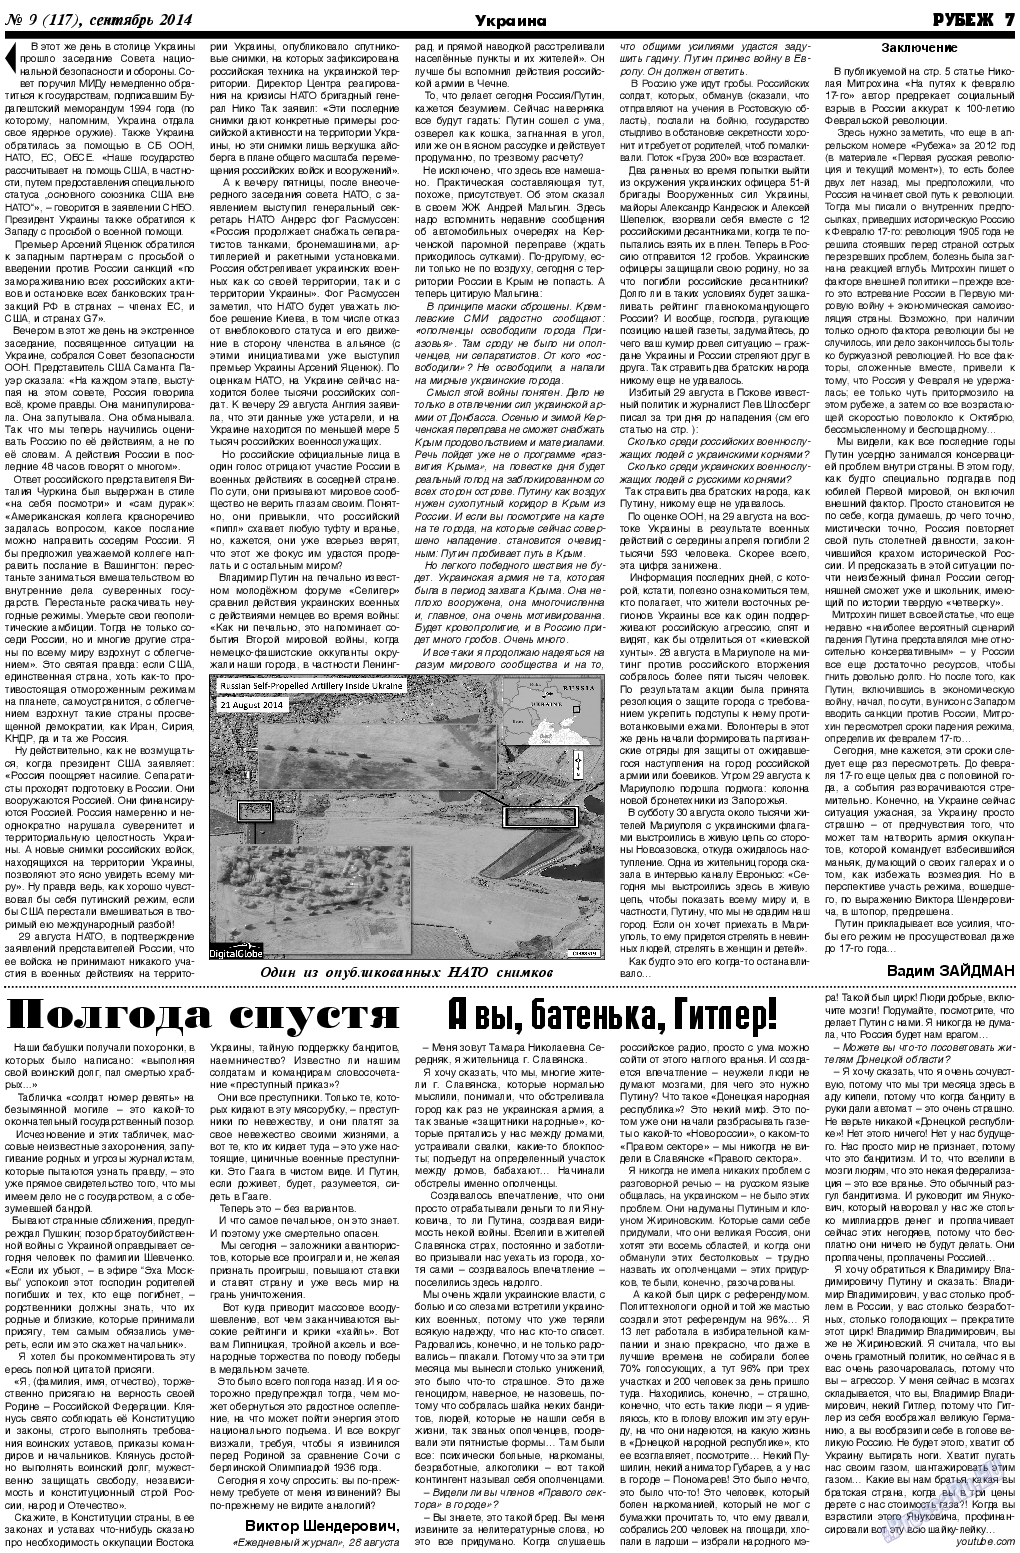 Рубеж, газета. 2014 №9 стр.7